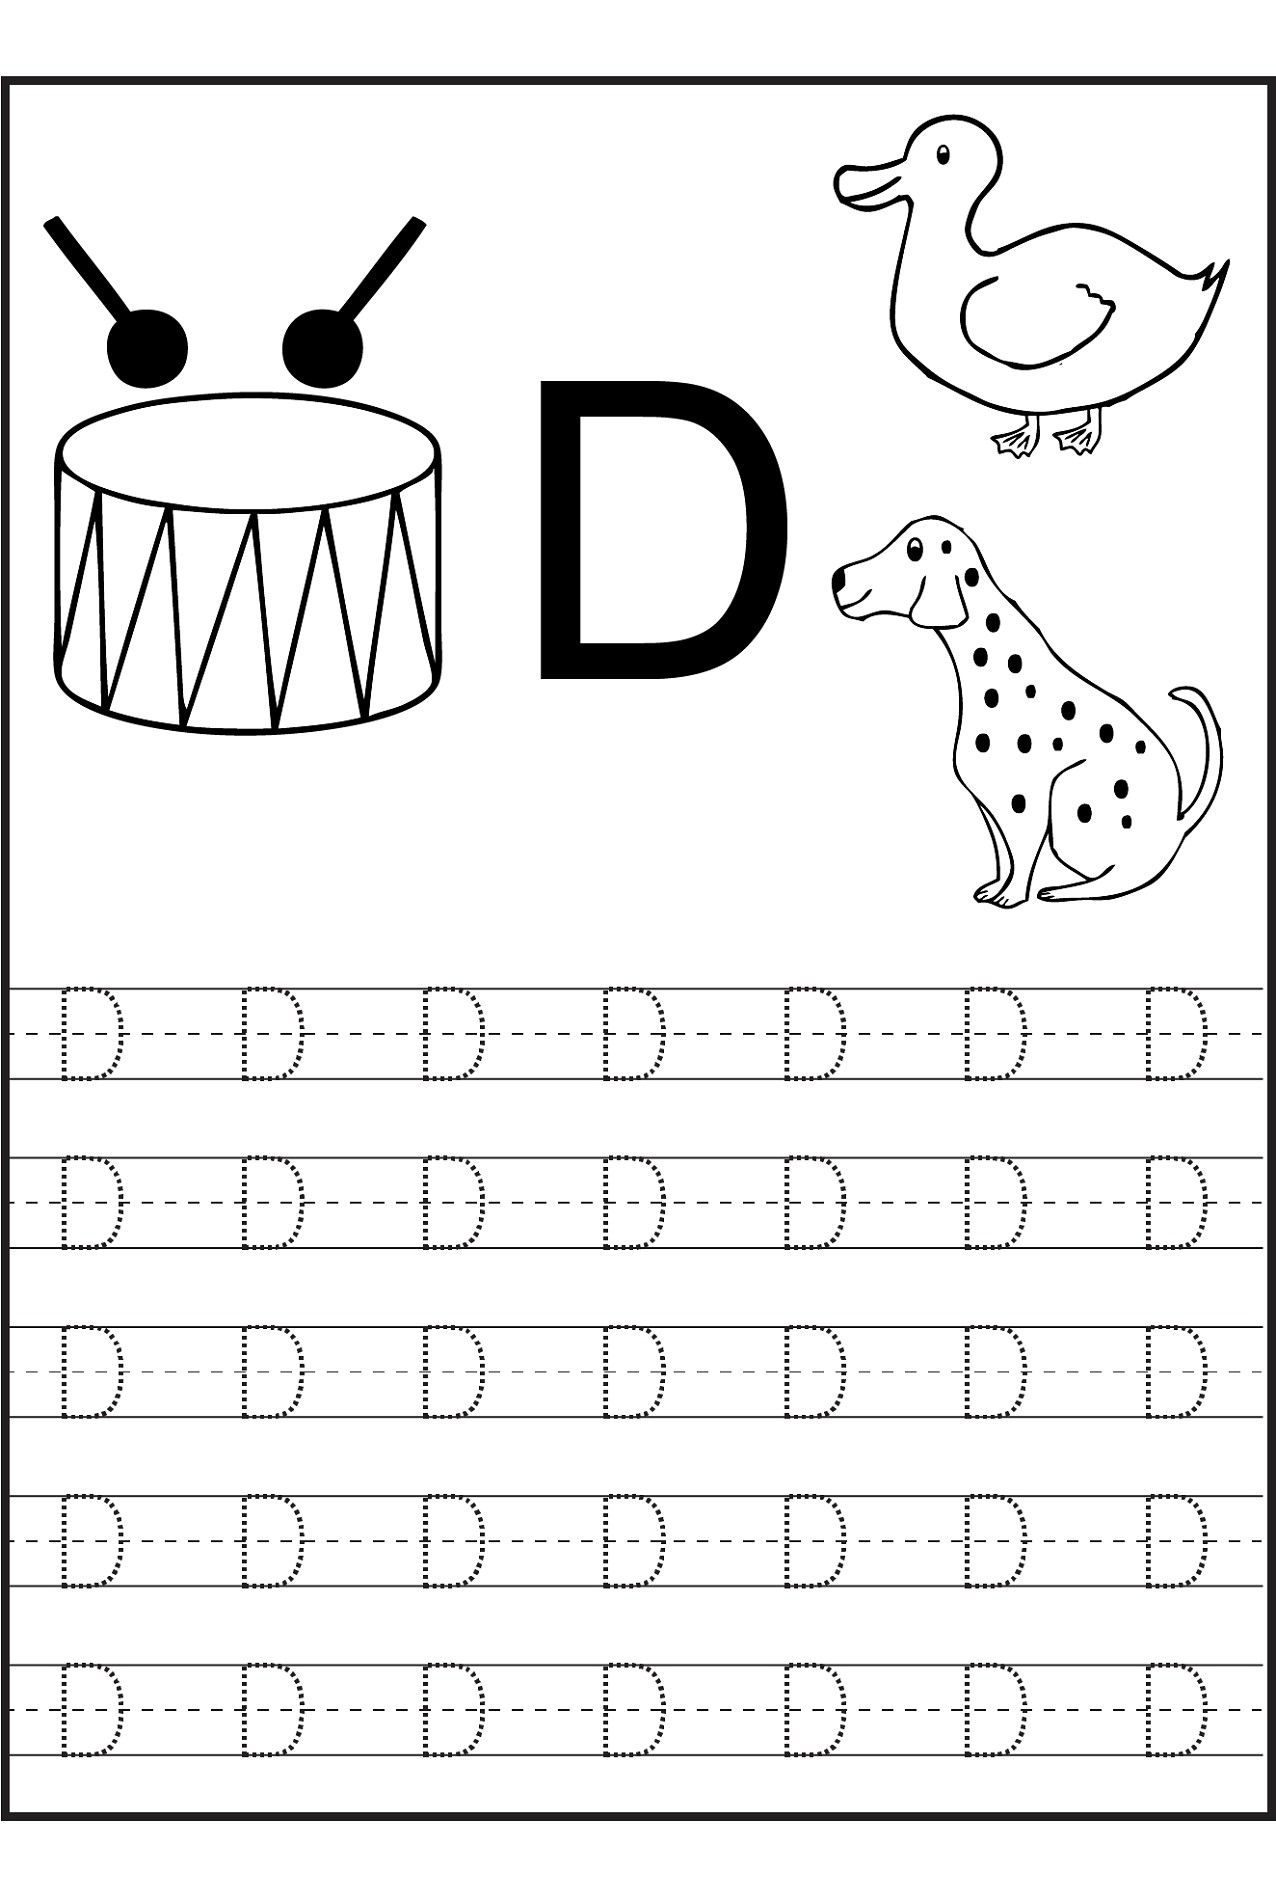 4 Worksheet Alphabet Worksheet For Nursery Class Trace in Alphabet Worksheets For Nursery Class